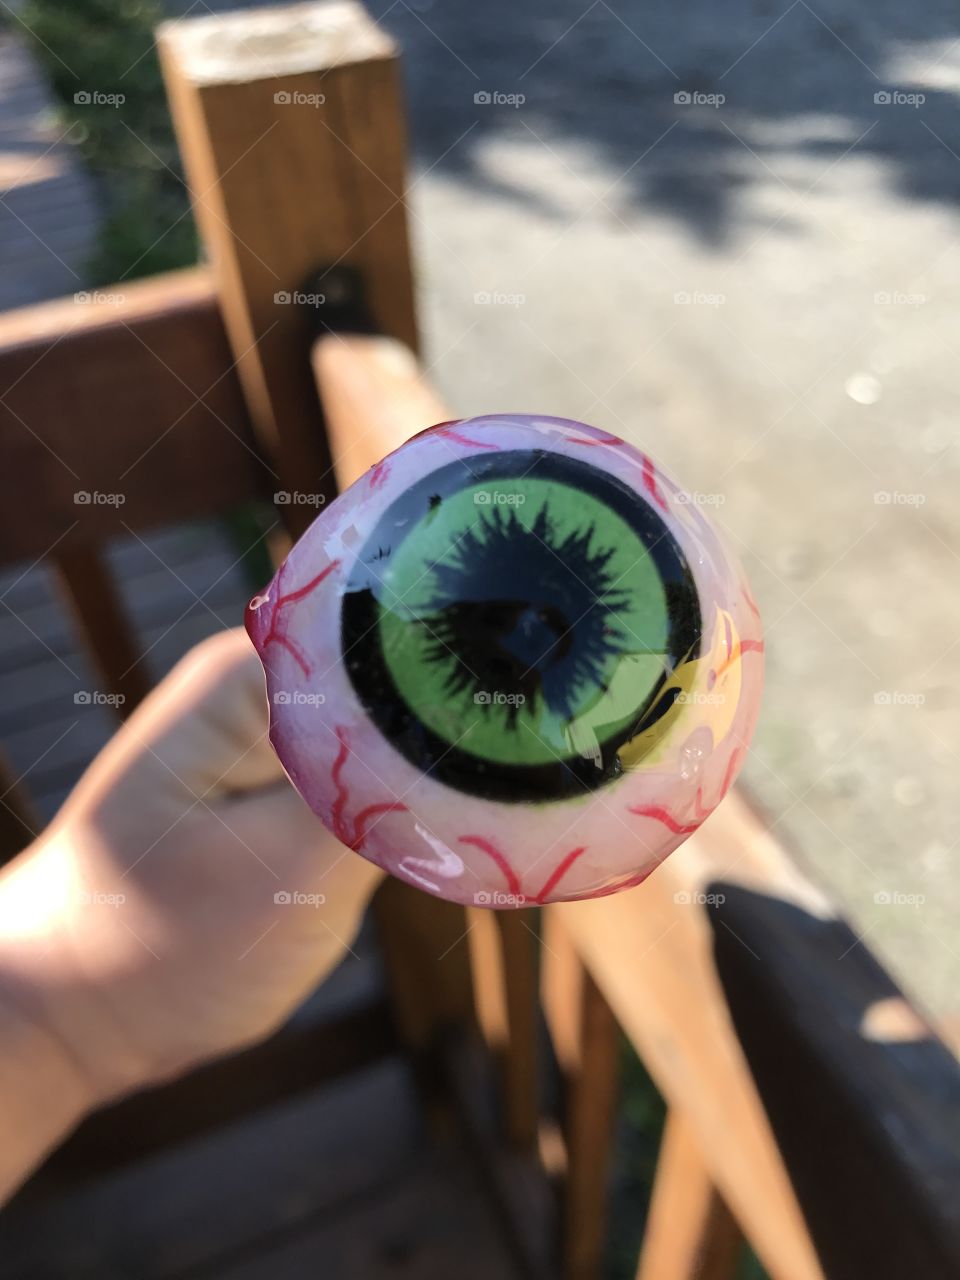 Eyeball I made bgcromwell1 